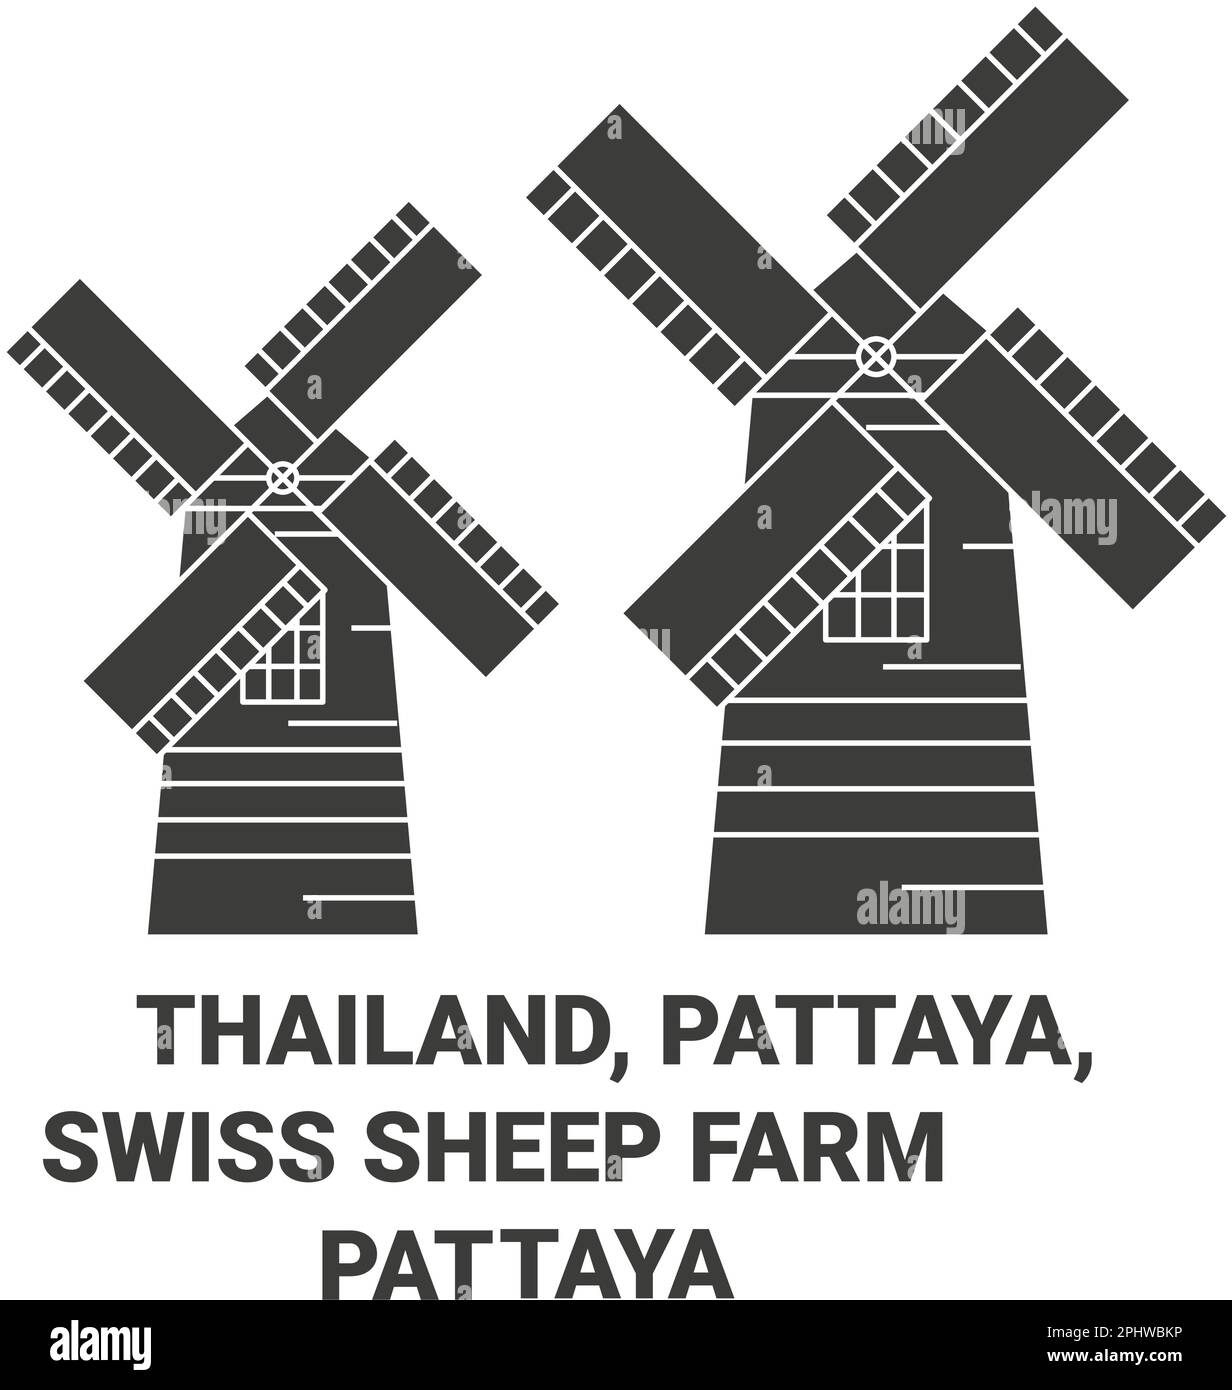 Thailand, Pattaya, Swiss Sheep Farm Pattaya travel landmark vector illustration Stock Vector